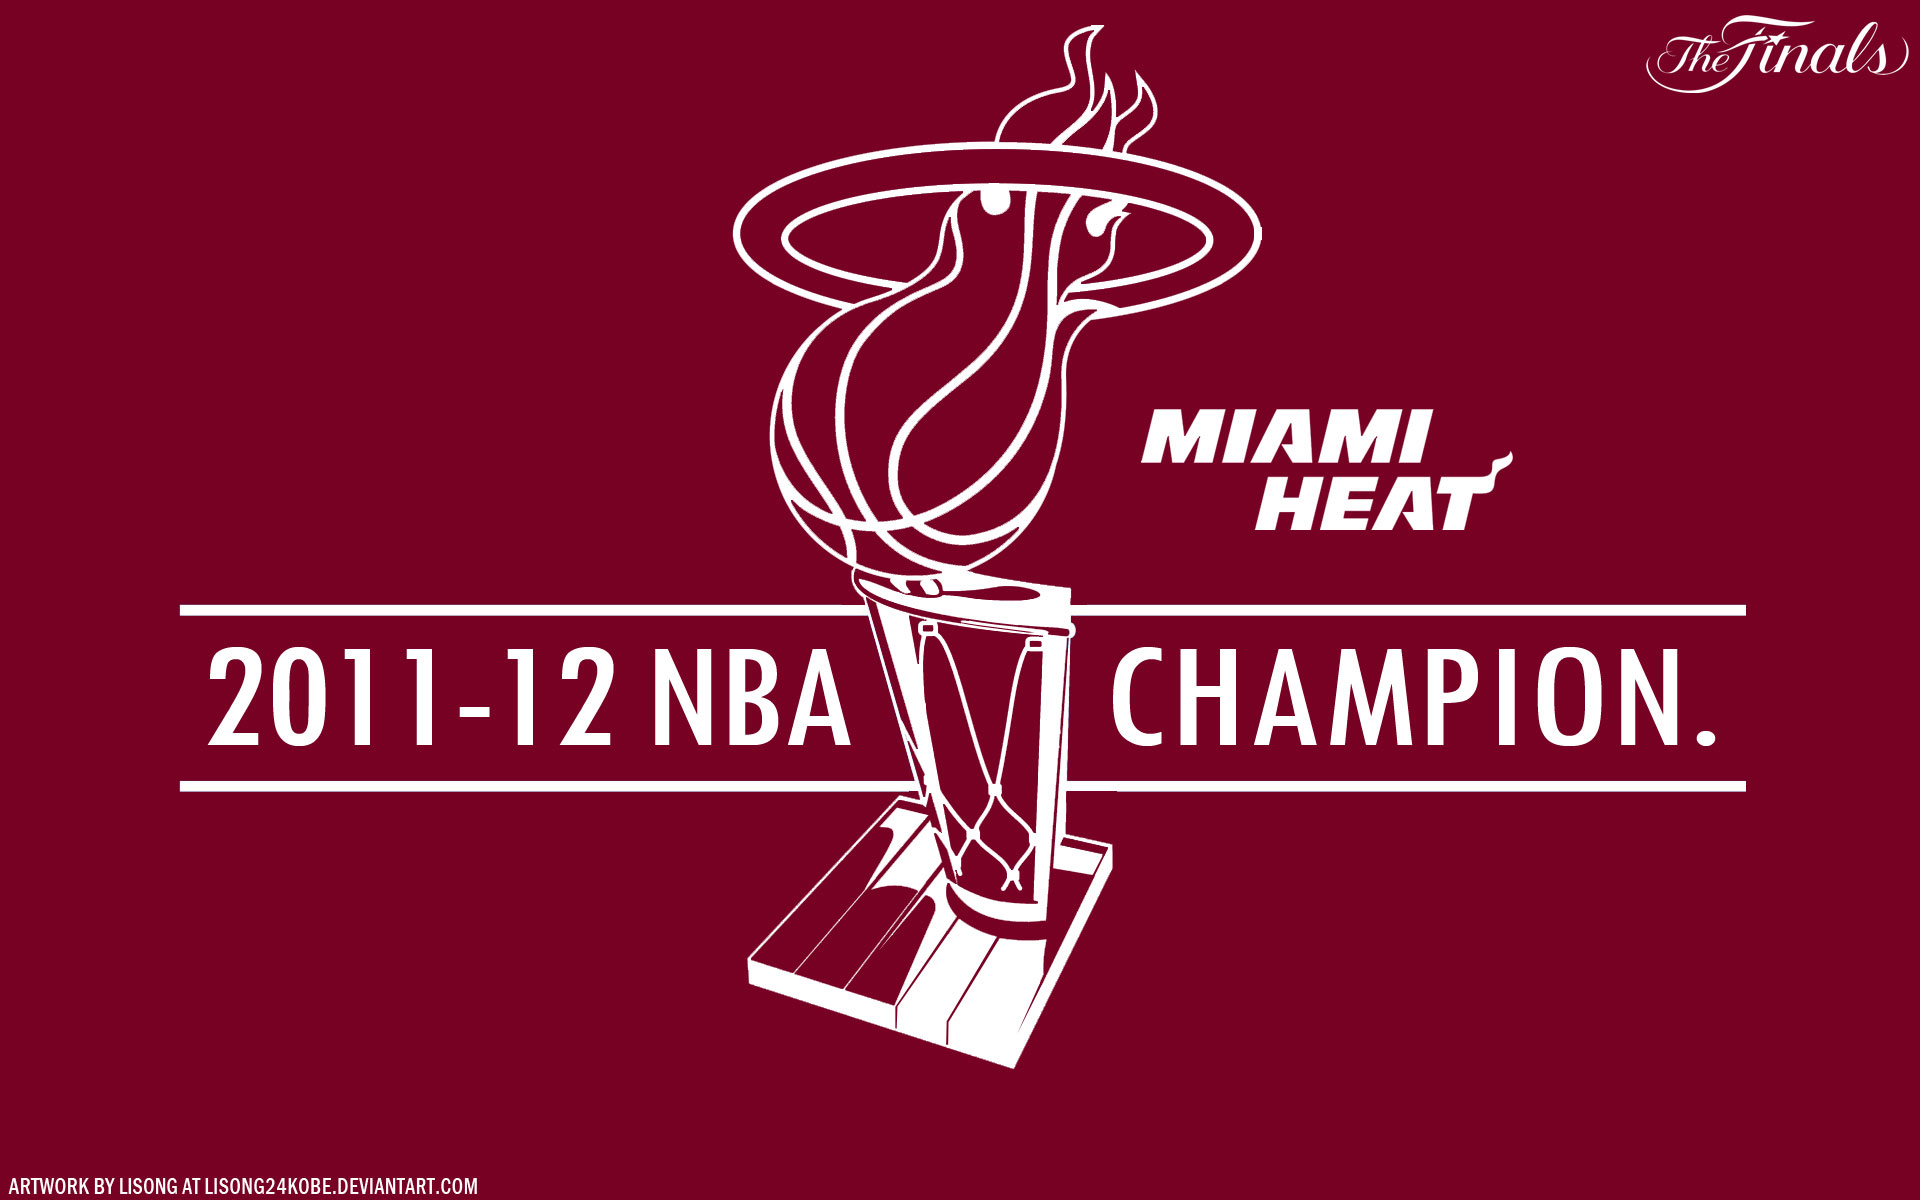 Miami Heat 2012 NBA Champions (photos)